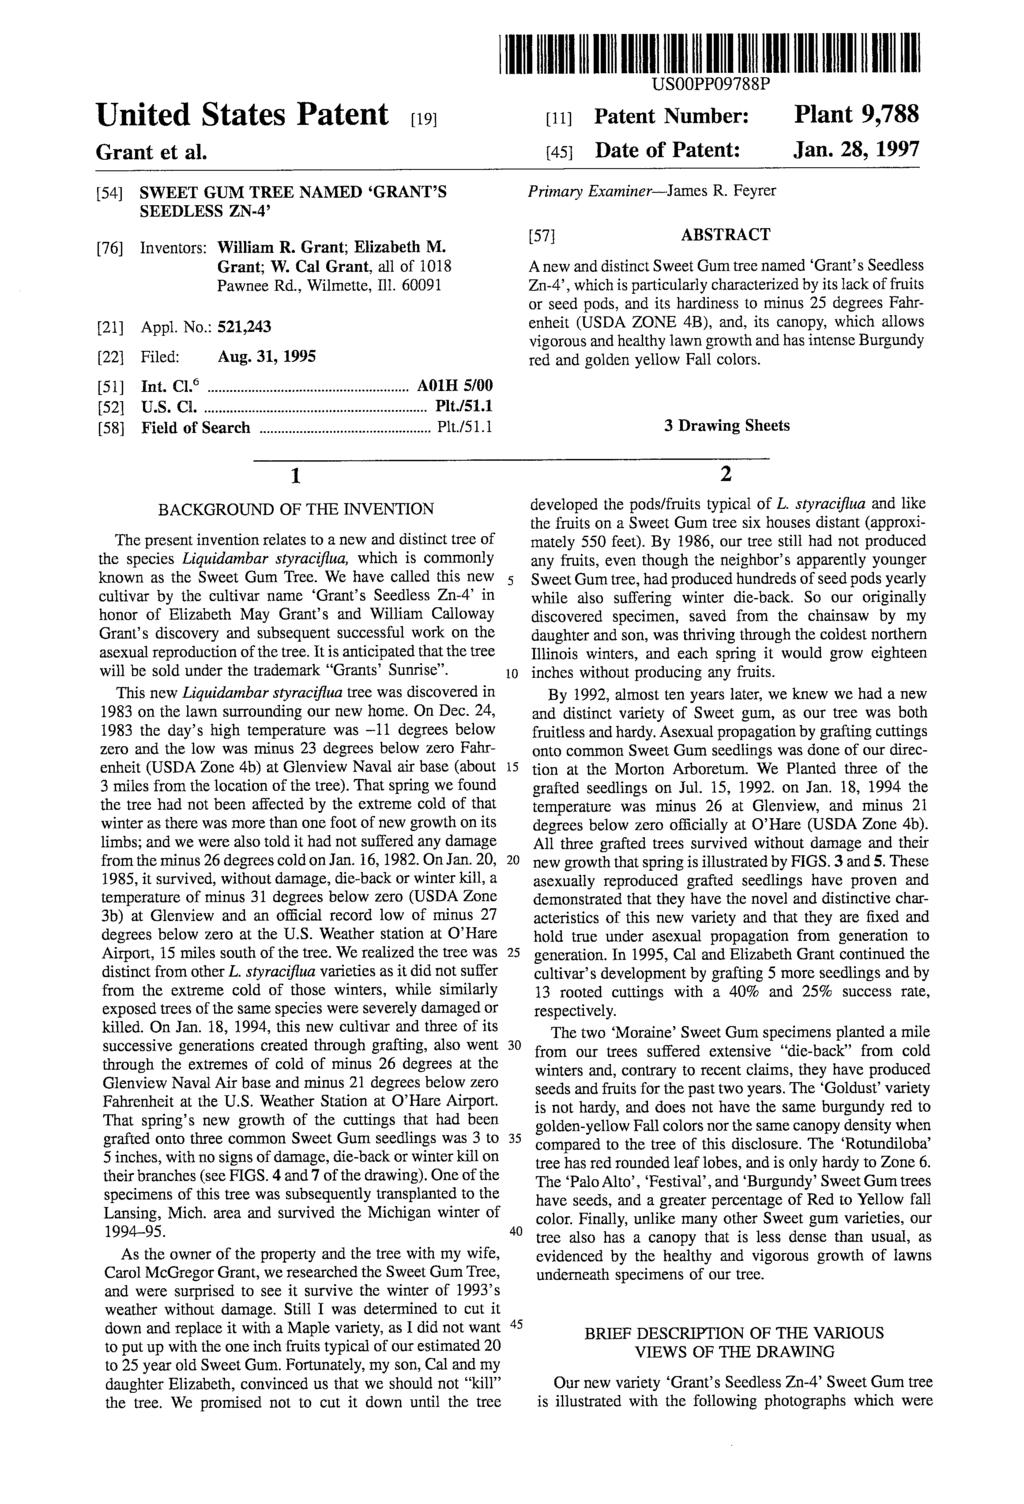 United States Patent (19) Grant et al. (54) SWEET GUM TREE NAMED GRANTS SEEDLESS ZN-4' (76) Inventors: William R. Grant; Elizabeth M. Grant; W. Cal Grant, all of 1018 Pawnee Rd., Wilmette, Ill.